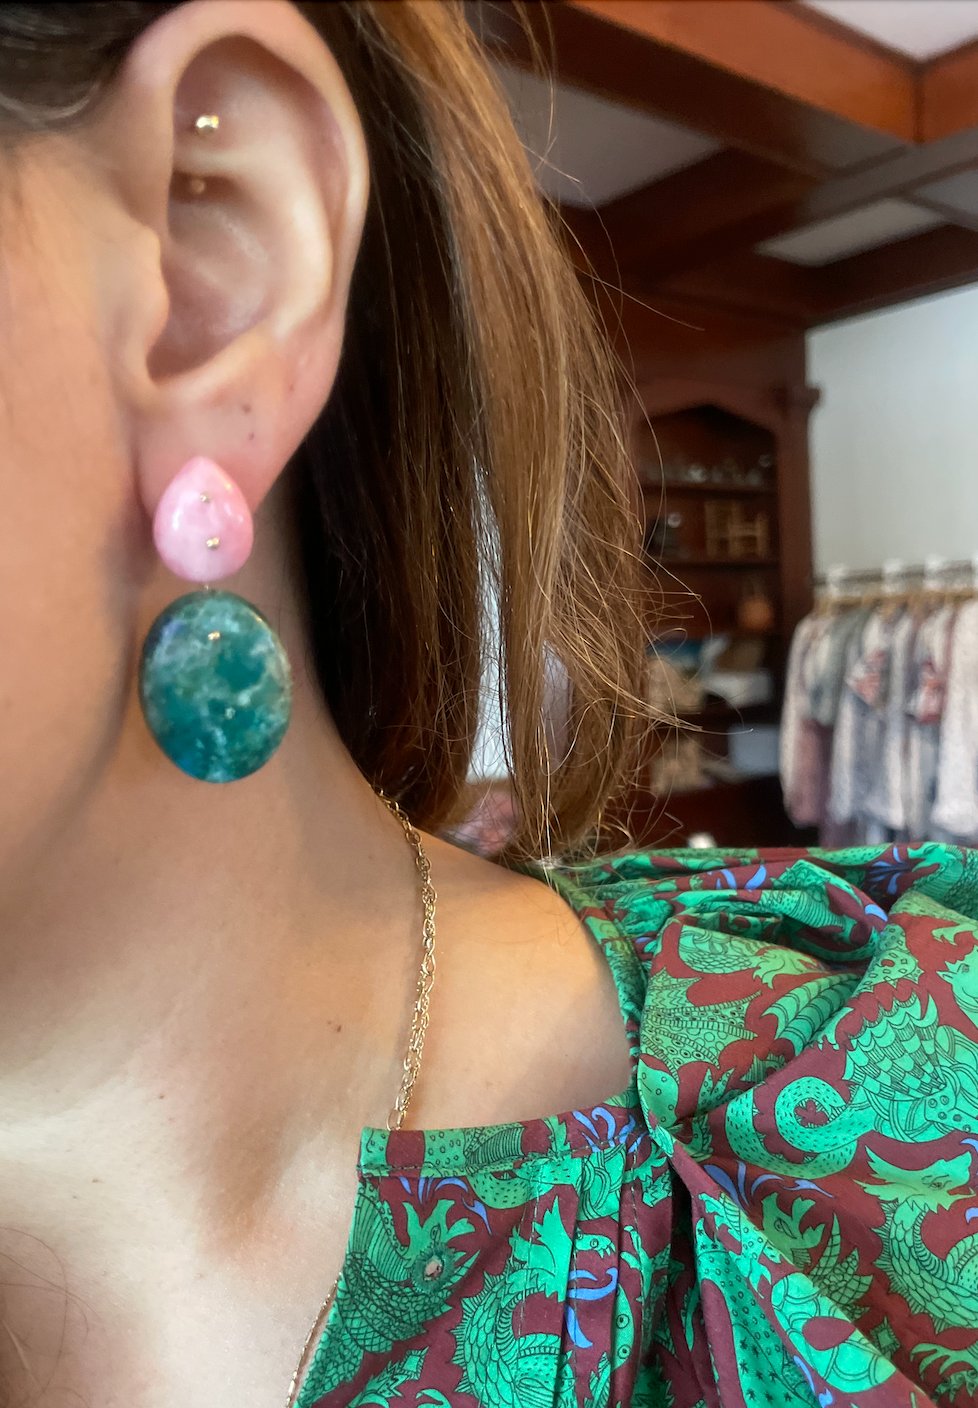 Mobile Earrings Pink Opal Chrysoprase